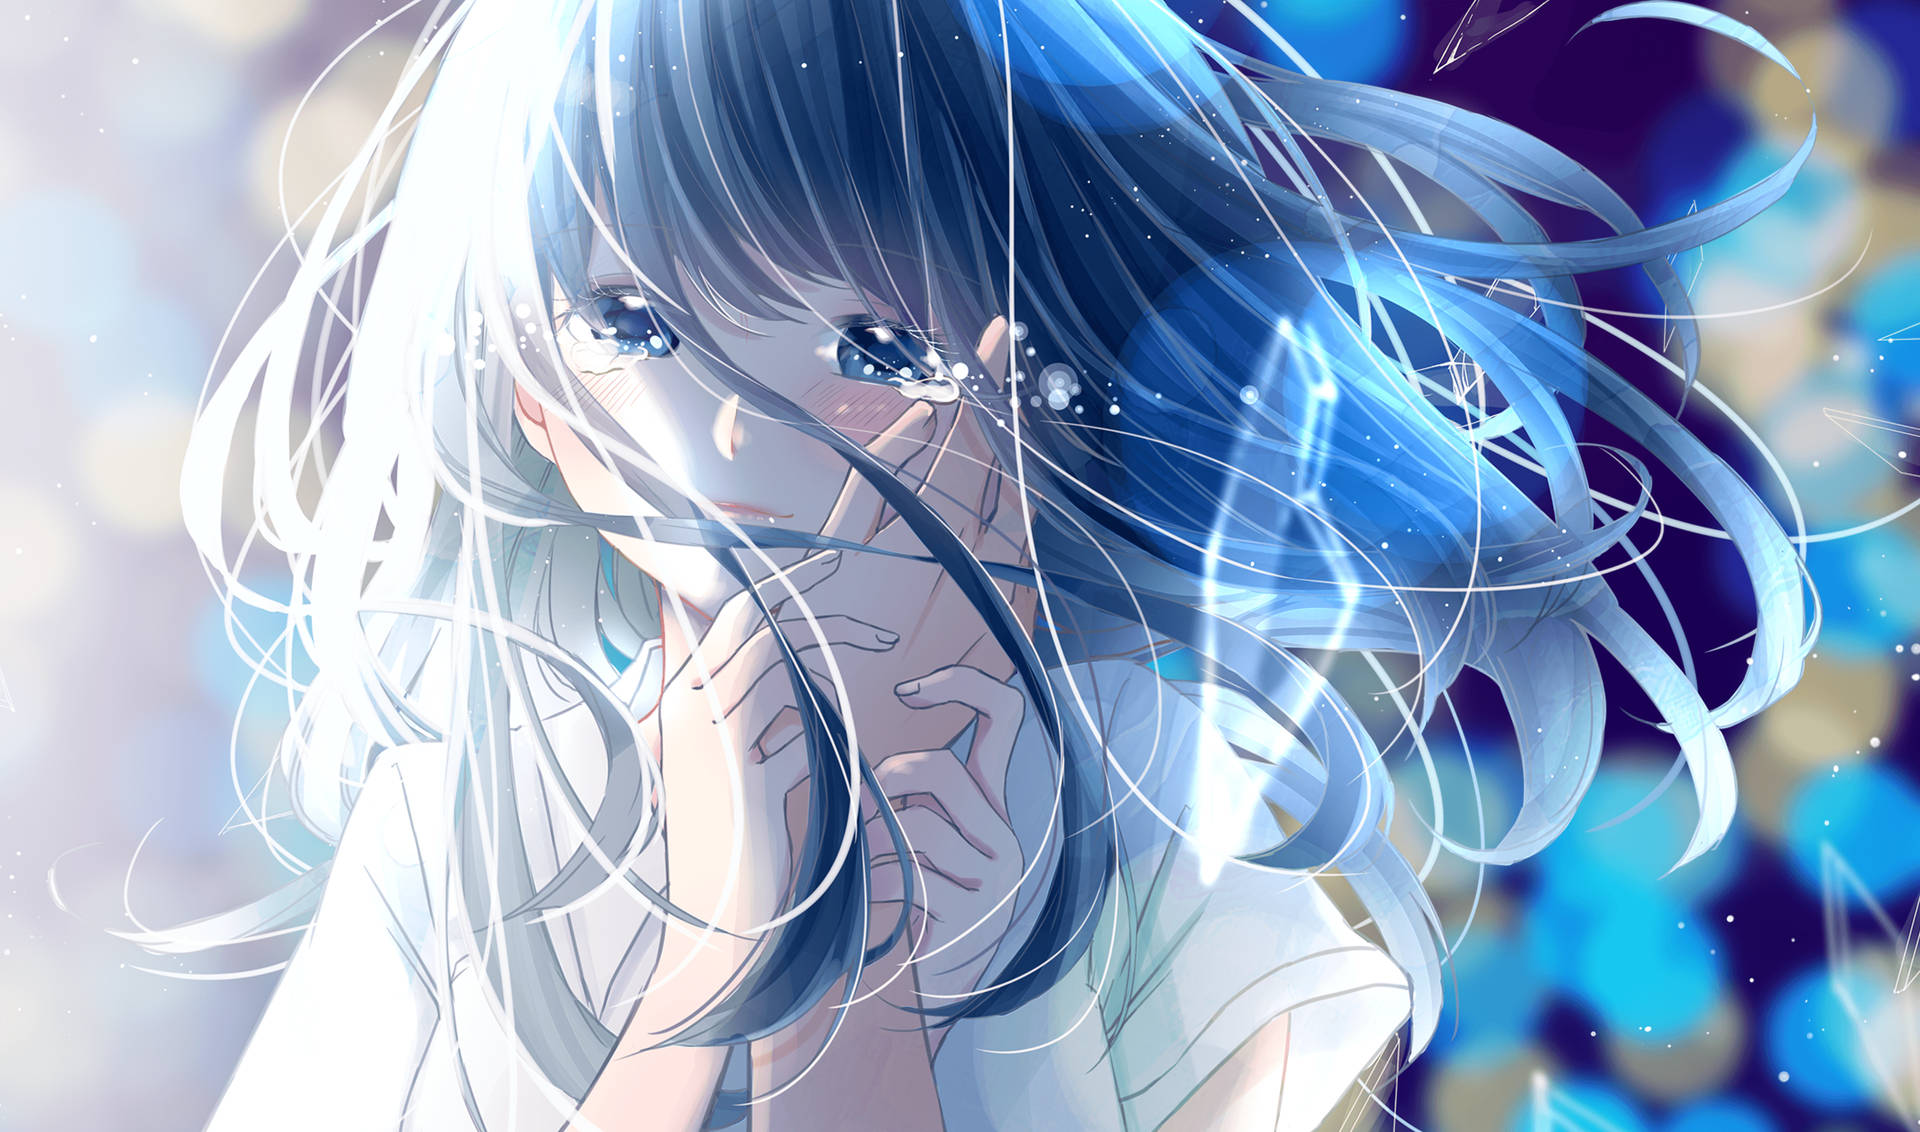 Sad Anime Girl Sparkling Lights Wallpaper